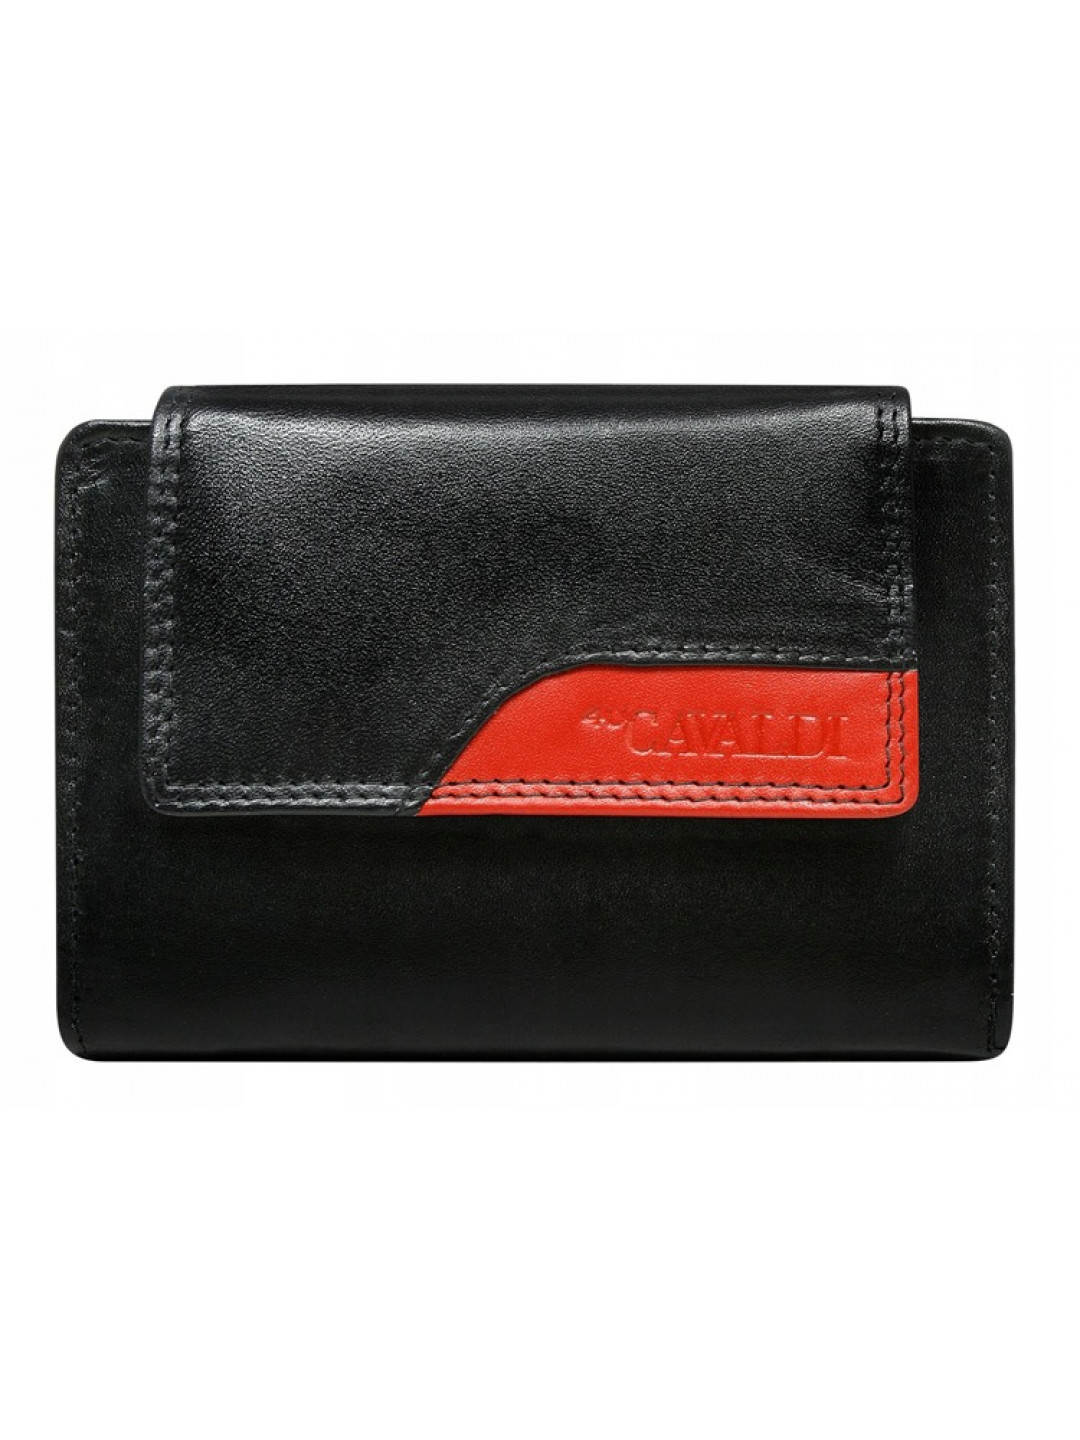 Praktická kožená peněženka Nora černo-červená